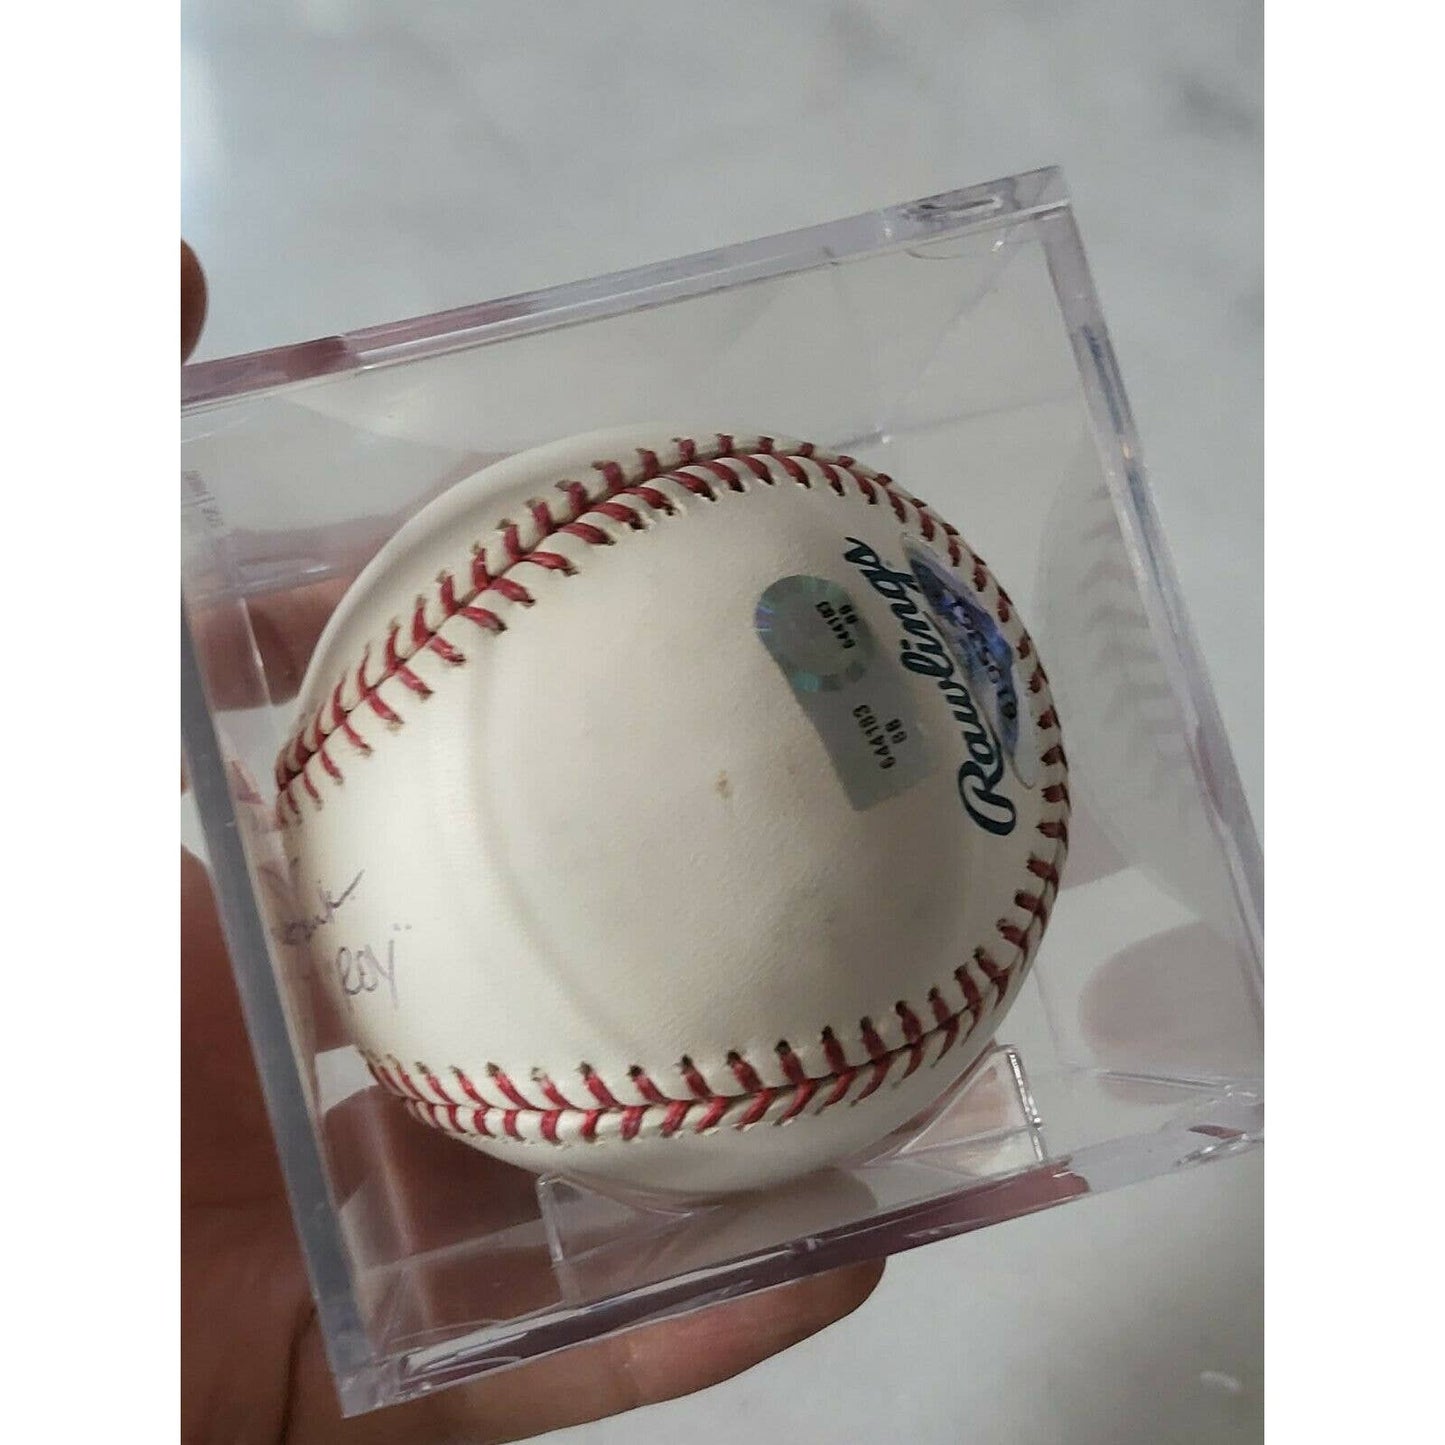 Stan Bahnsen Autographed/Signed Baseball TRISTAR 68 AL ROY - TreasuresEvolved